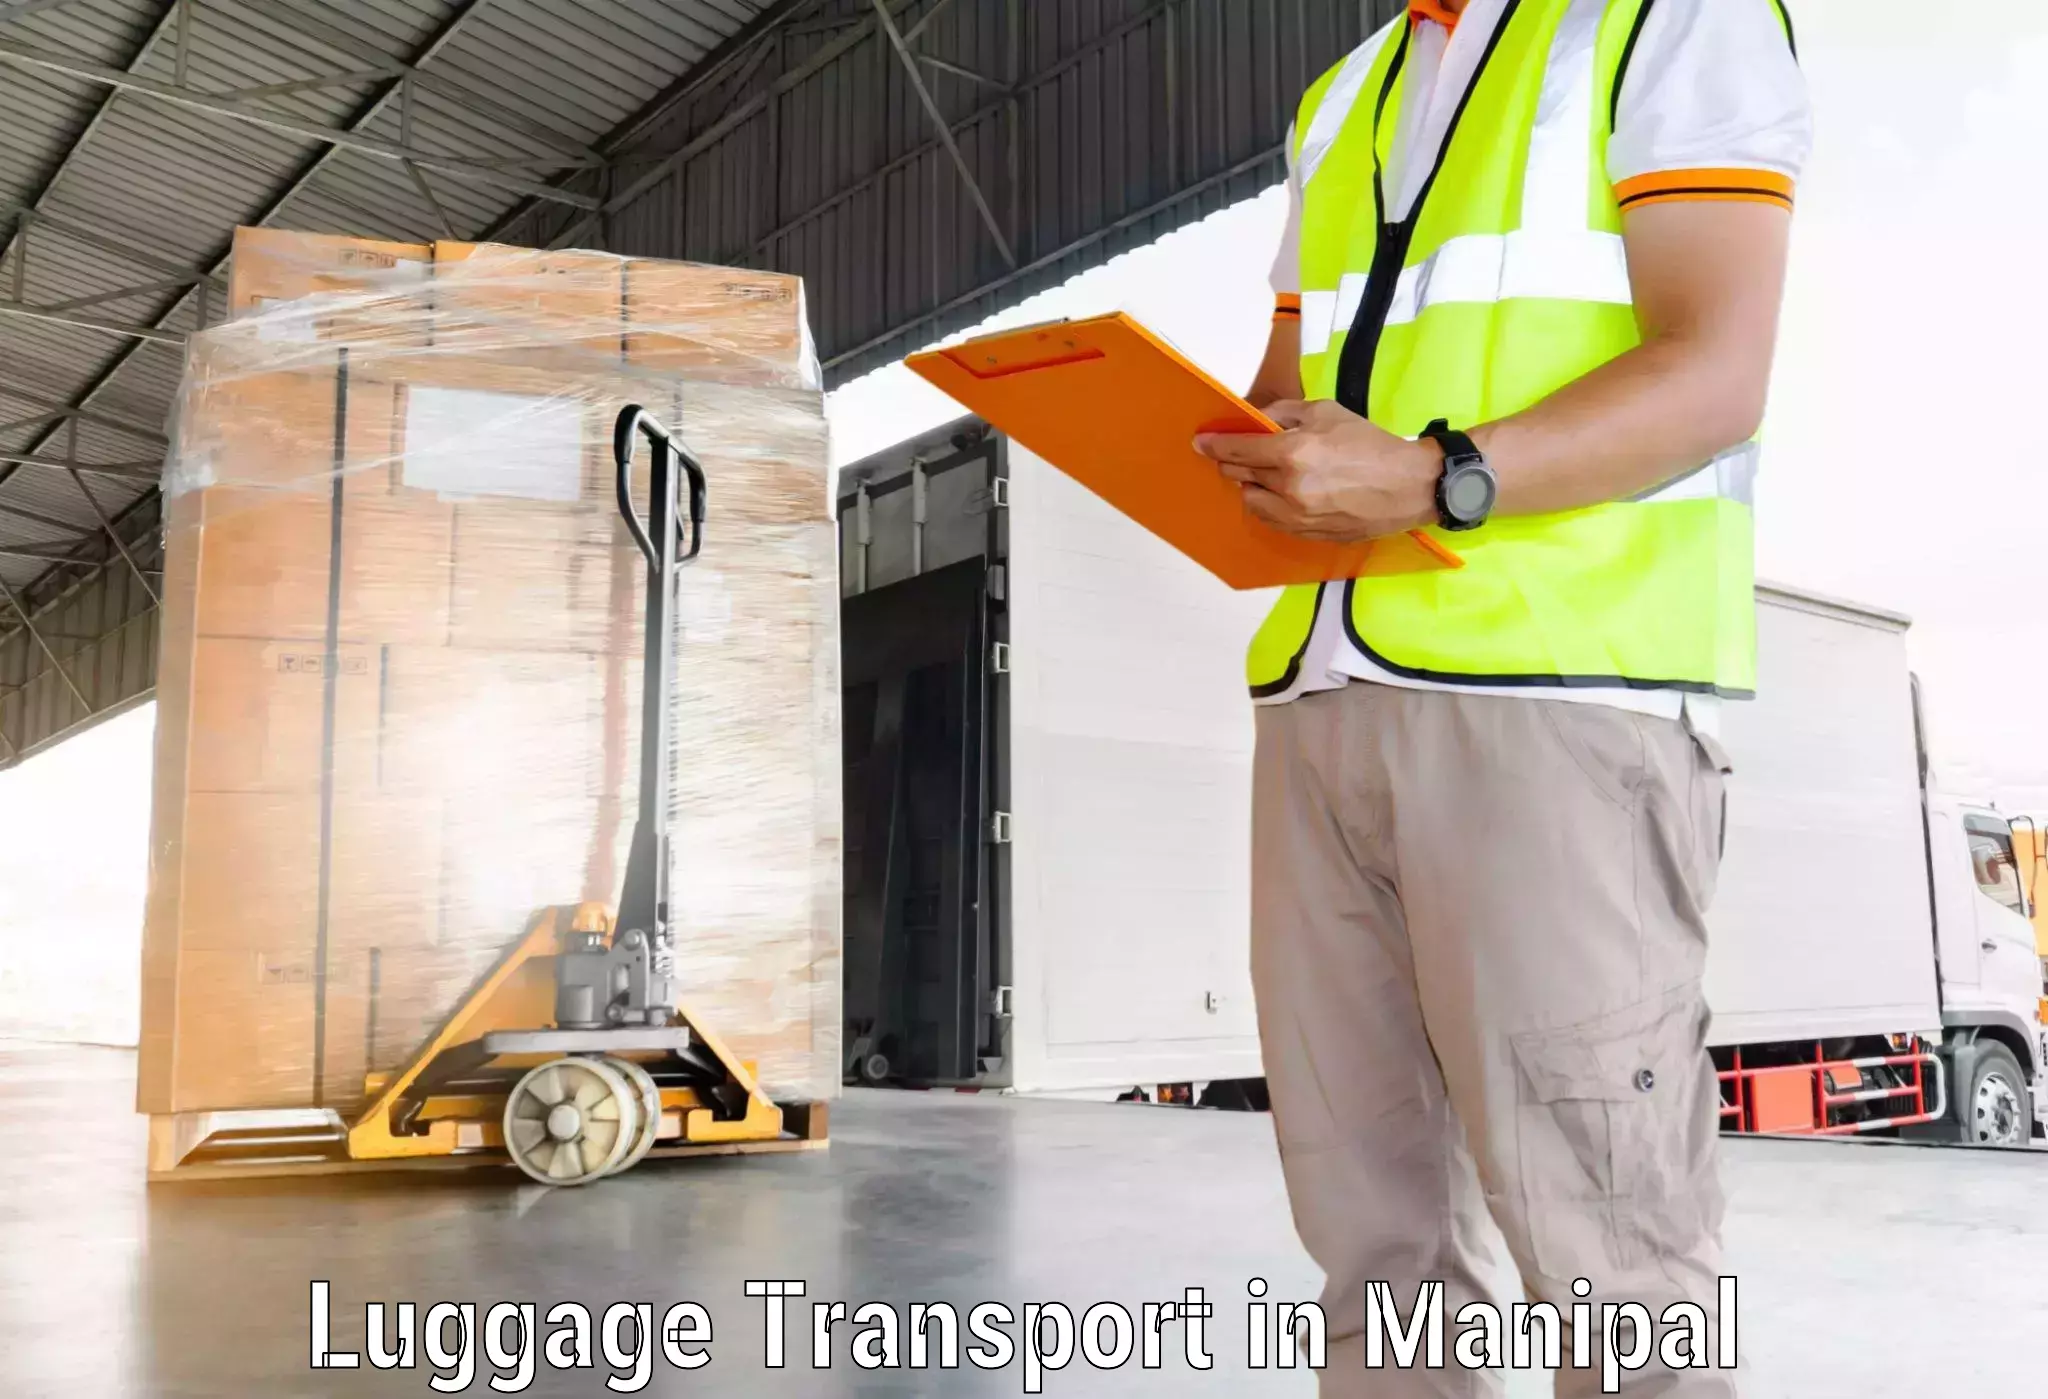 Regional luggage transport in Manipal